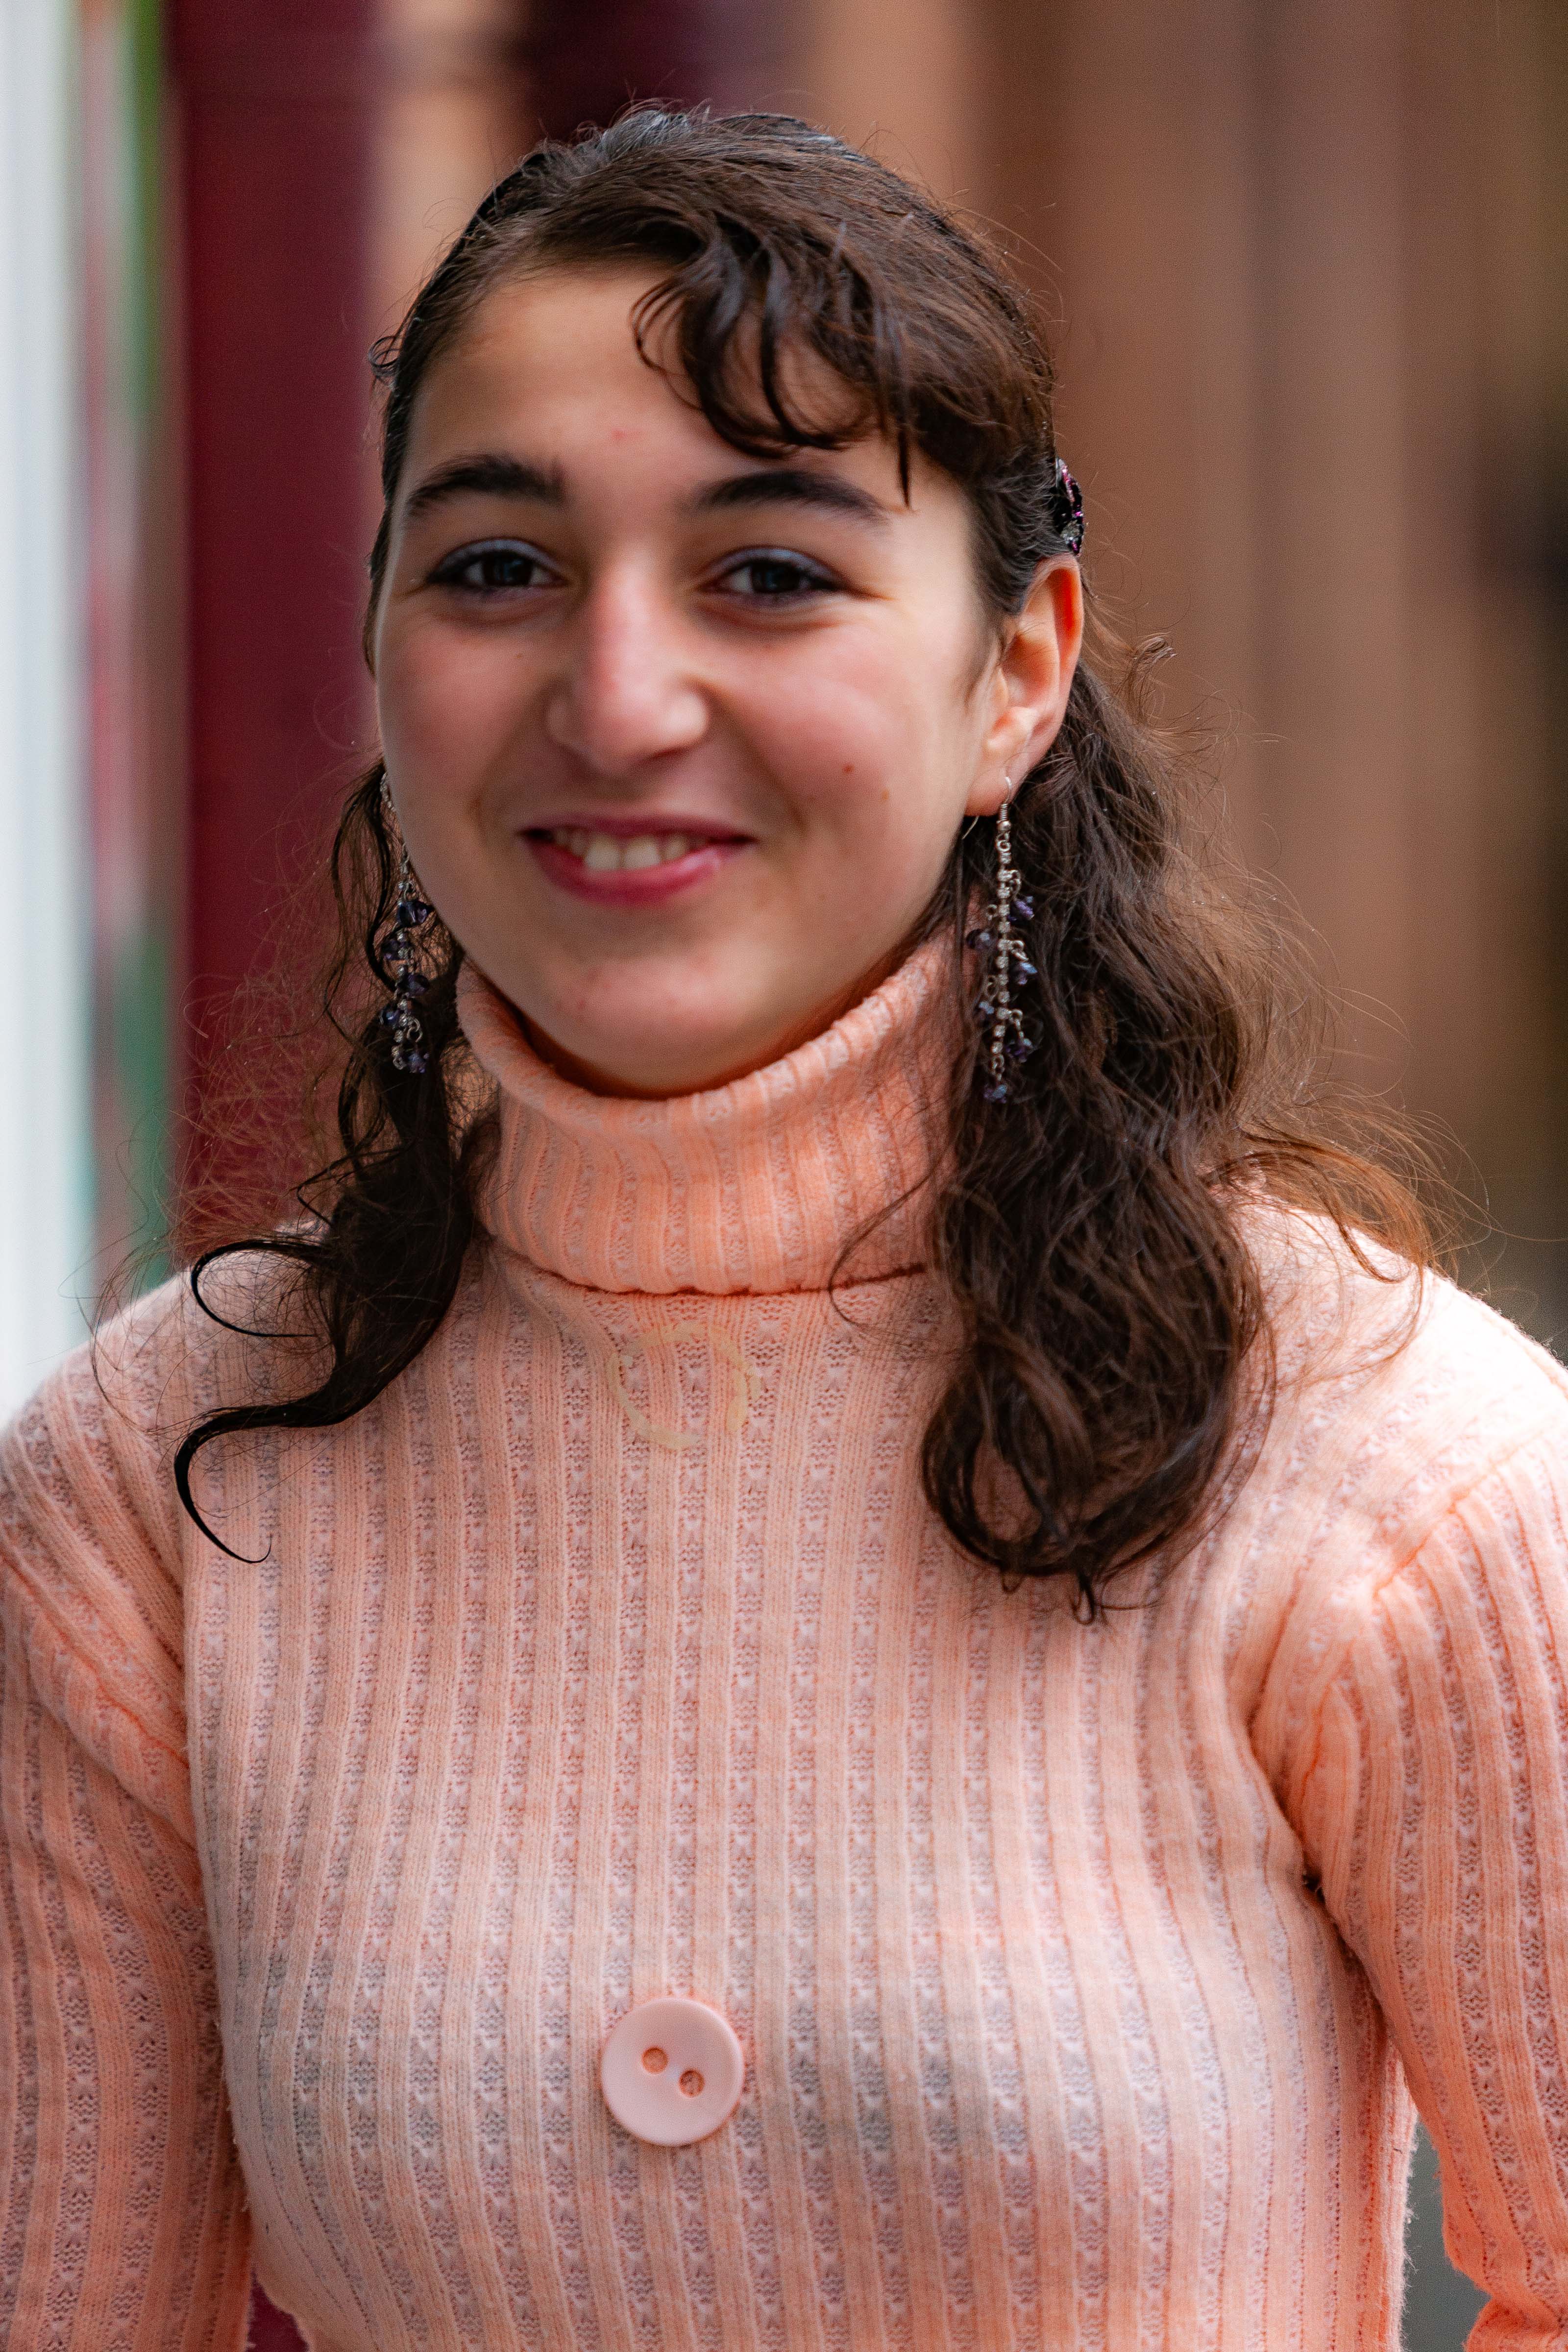 Azerbaijan, Qax Prov, Young Woman, 2009, IMG 8441